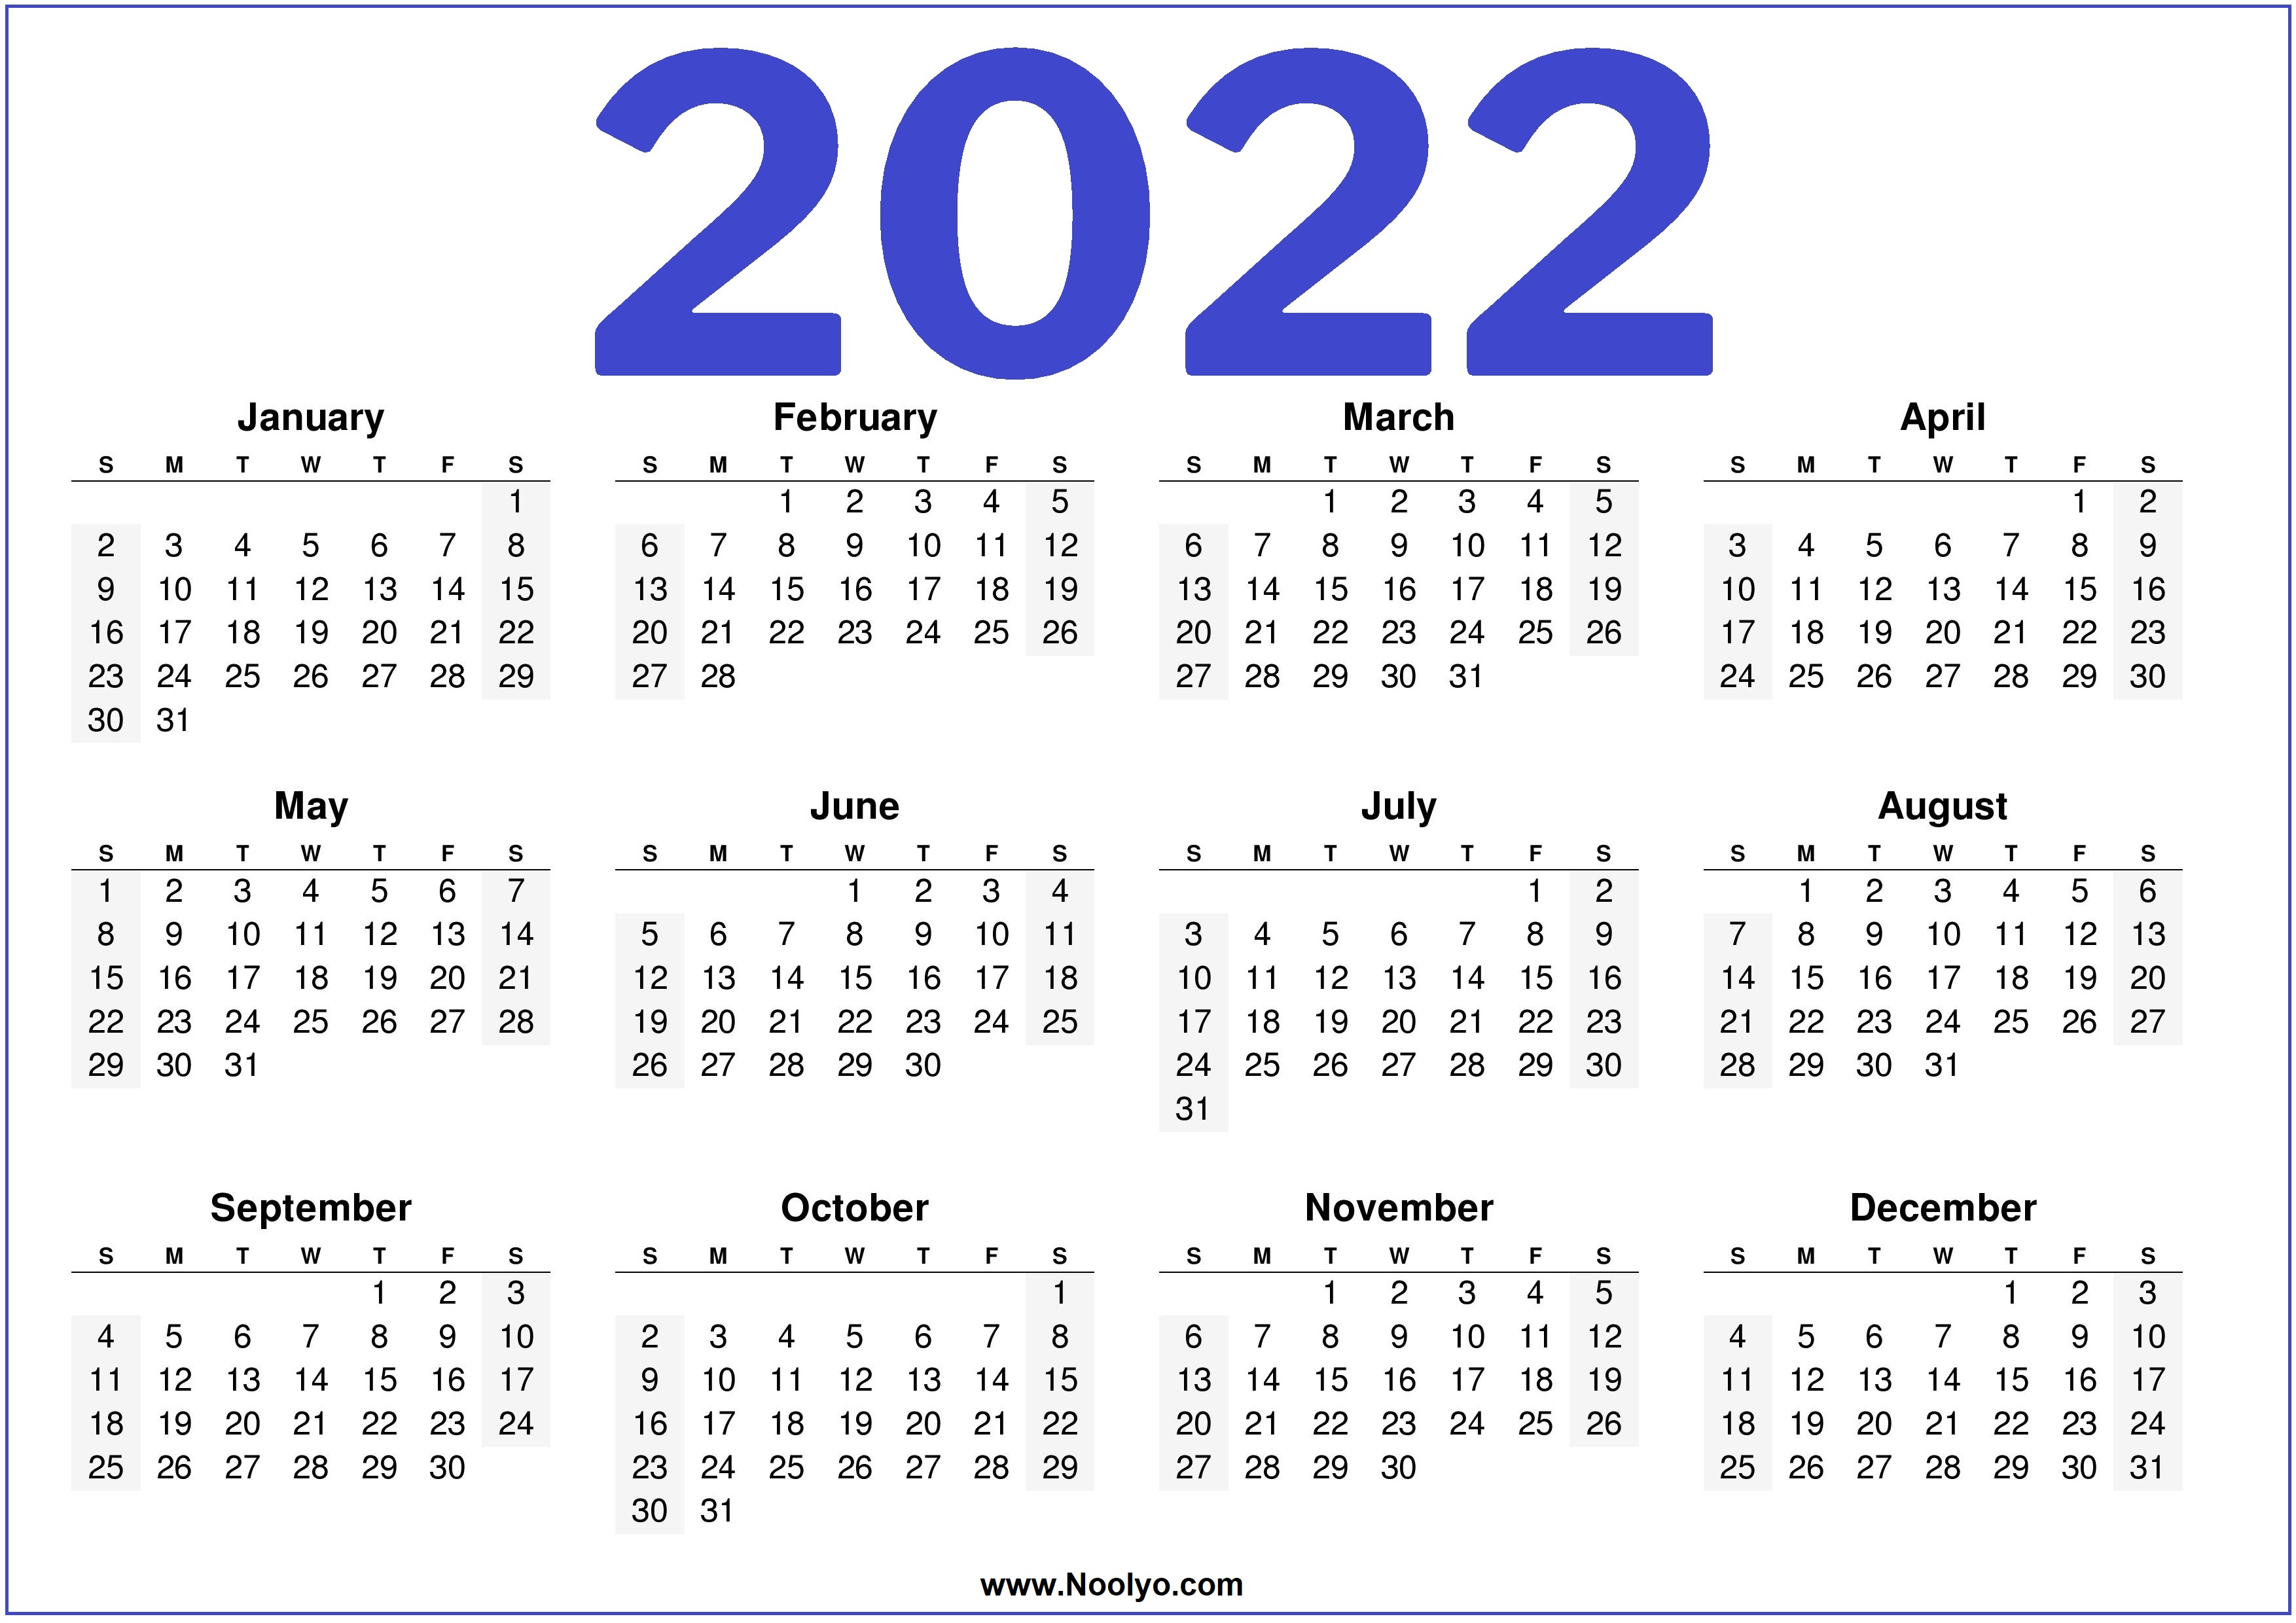 printable-2022-yearly-wall-calendar-large-2022-calendar-etsy-2022